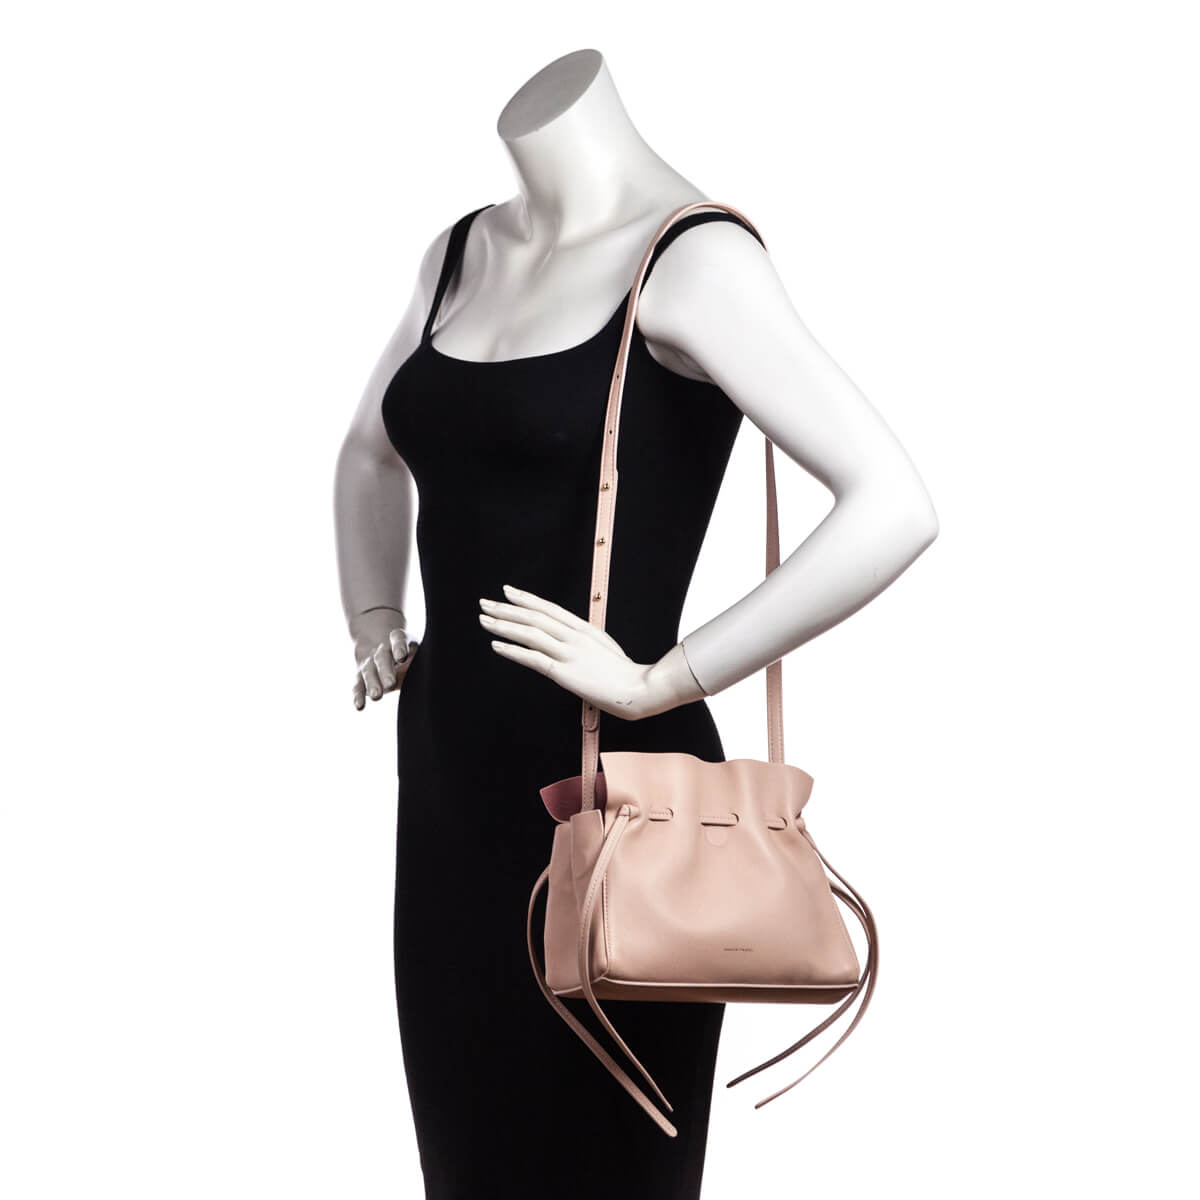 Mansur Gavriel Rosa & Blush Lambskin Mini Protea Bag - Love that Bag etc - Preowned Authentic Designer Handbags & Preloved Fashions